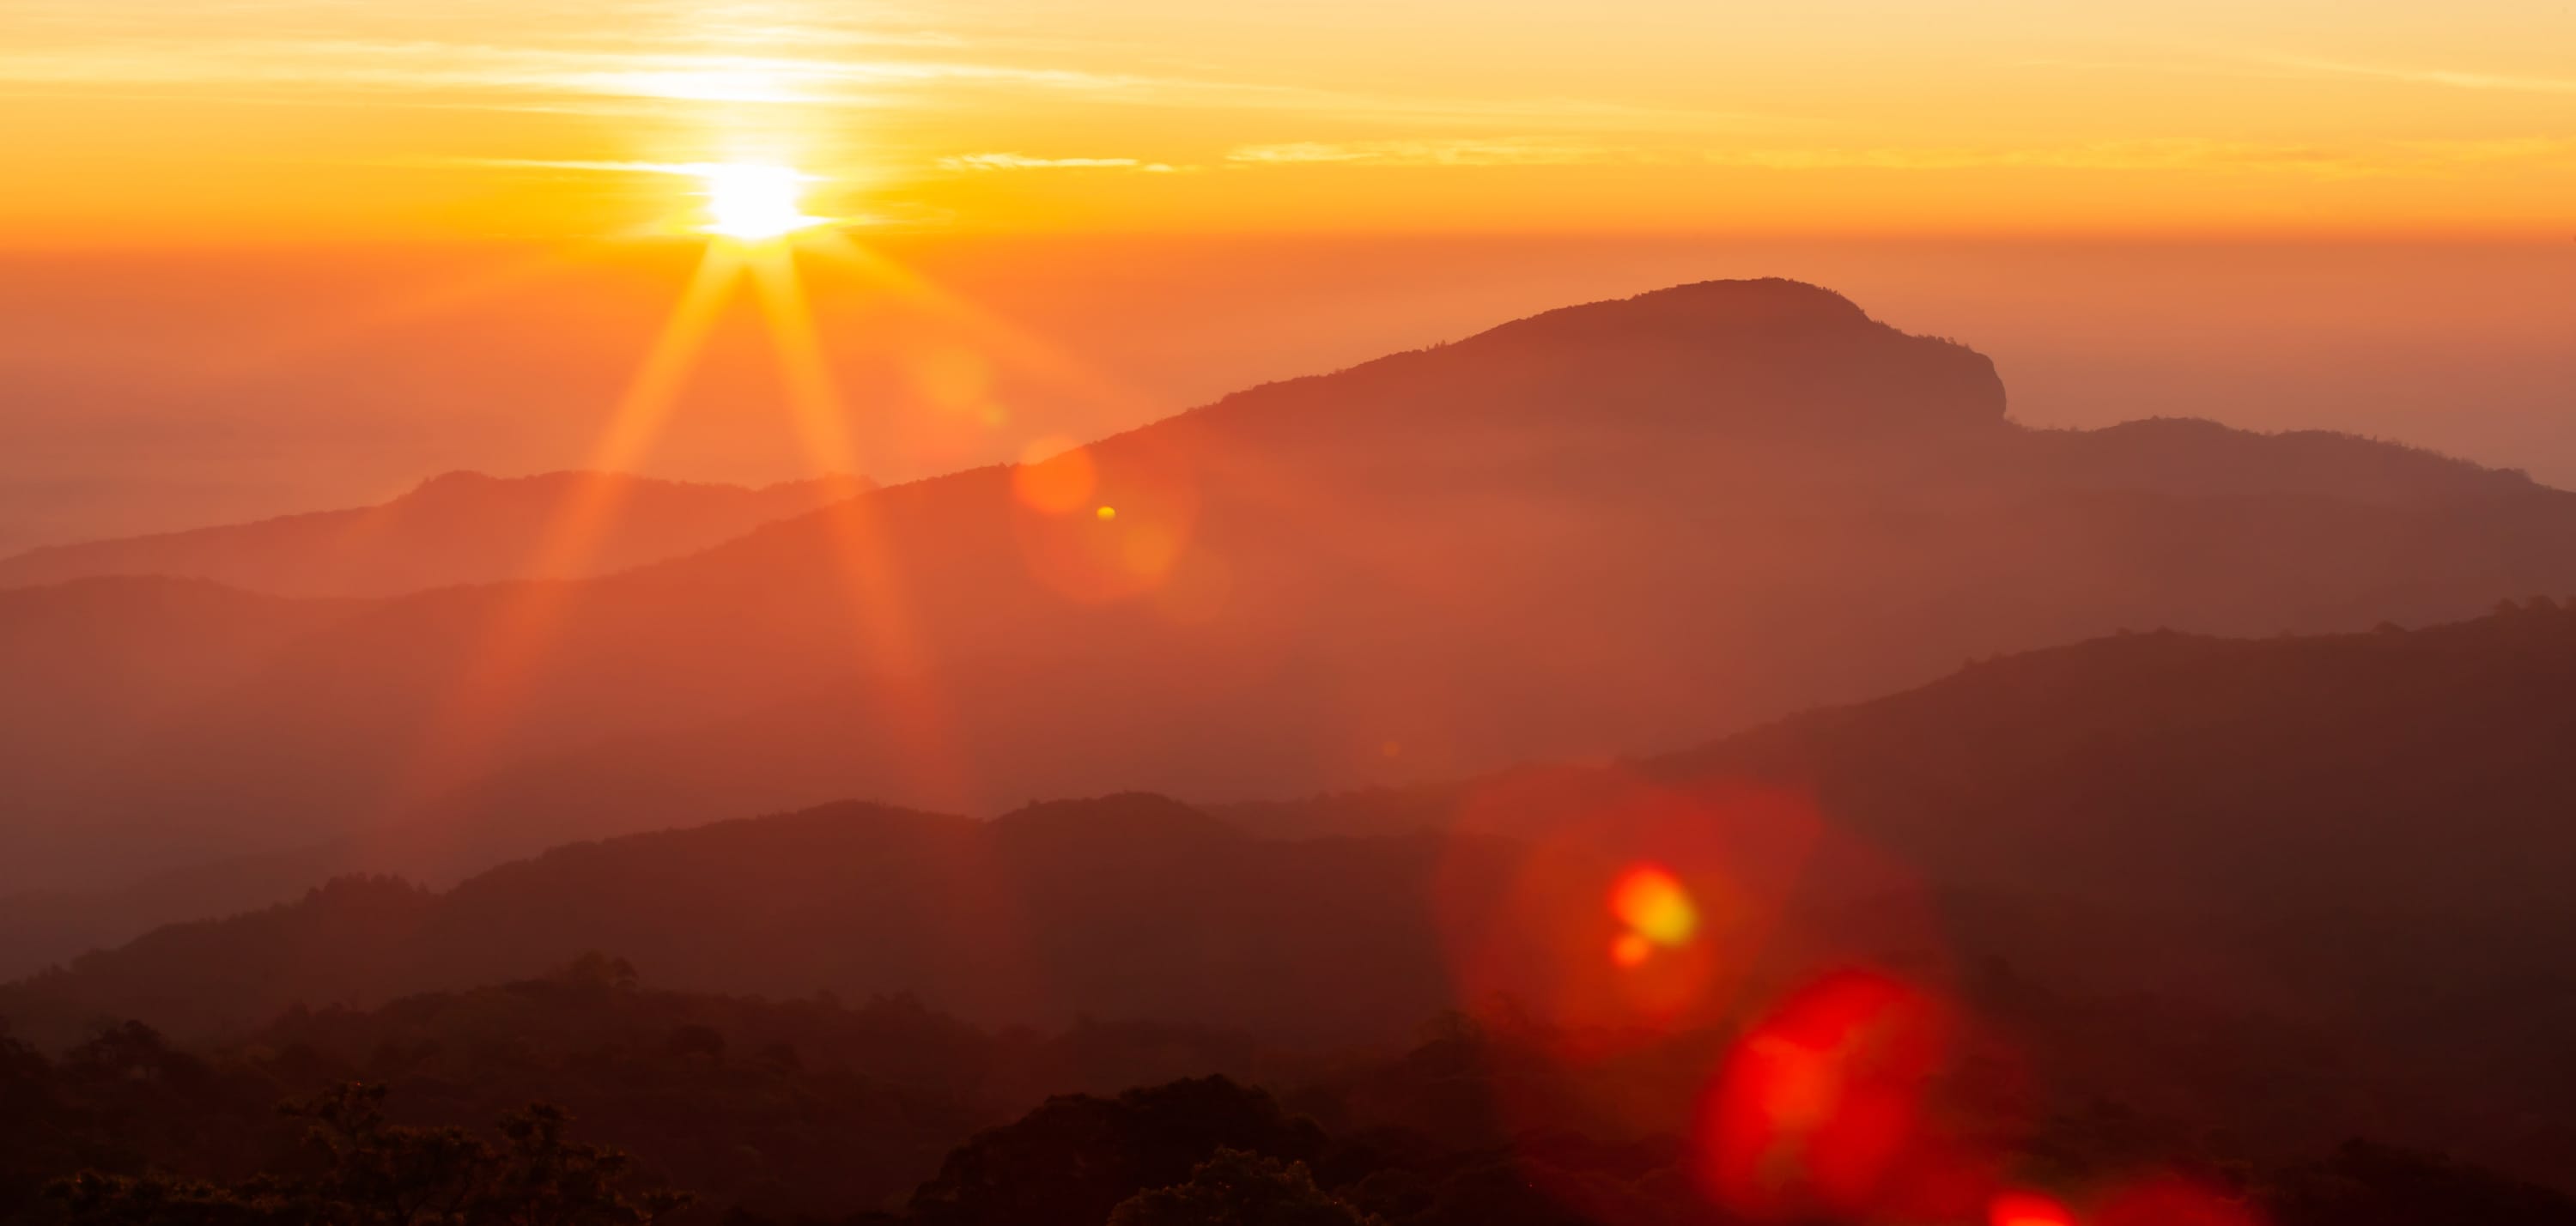 sunrise over mountains, representing new treatments for myasthenia gravis